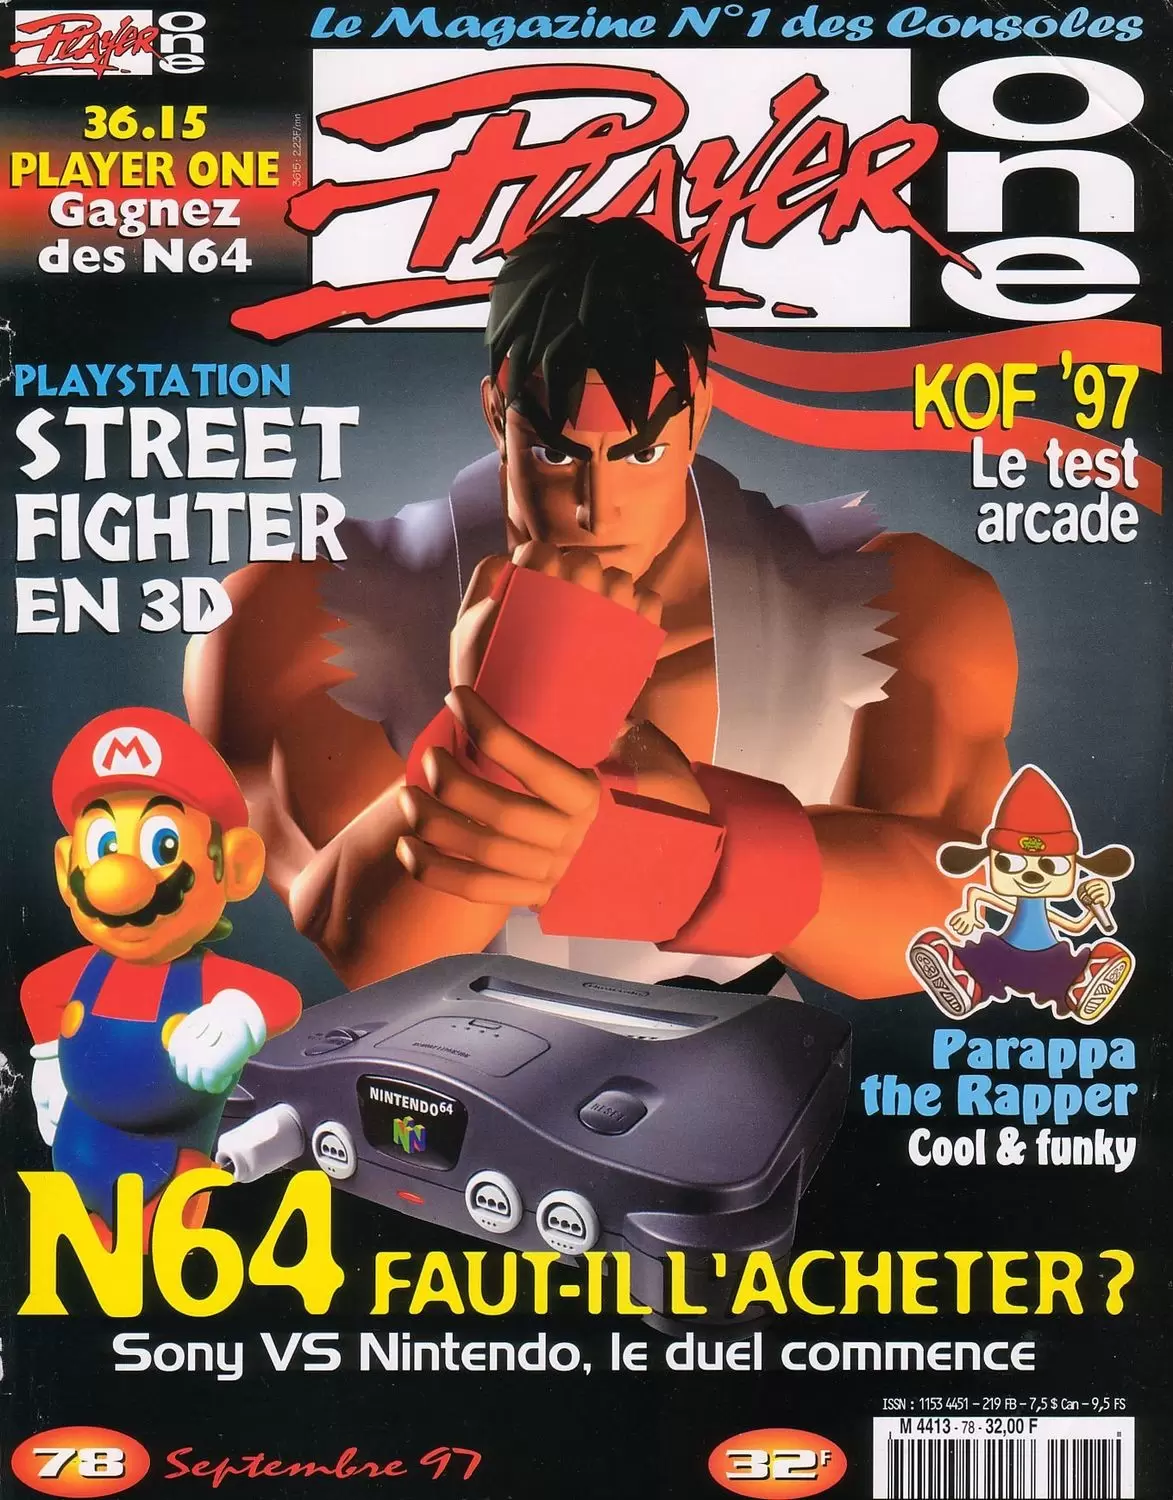 Player One - Magazine N°078